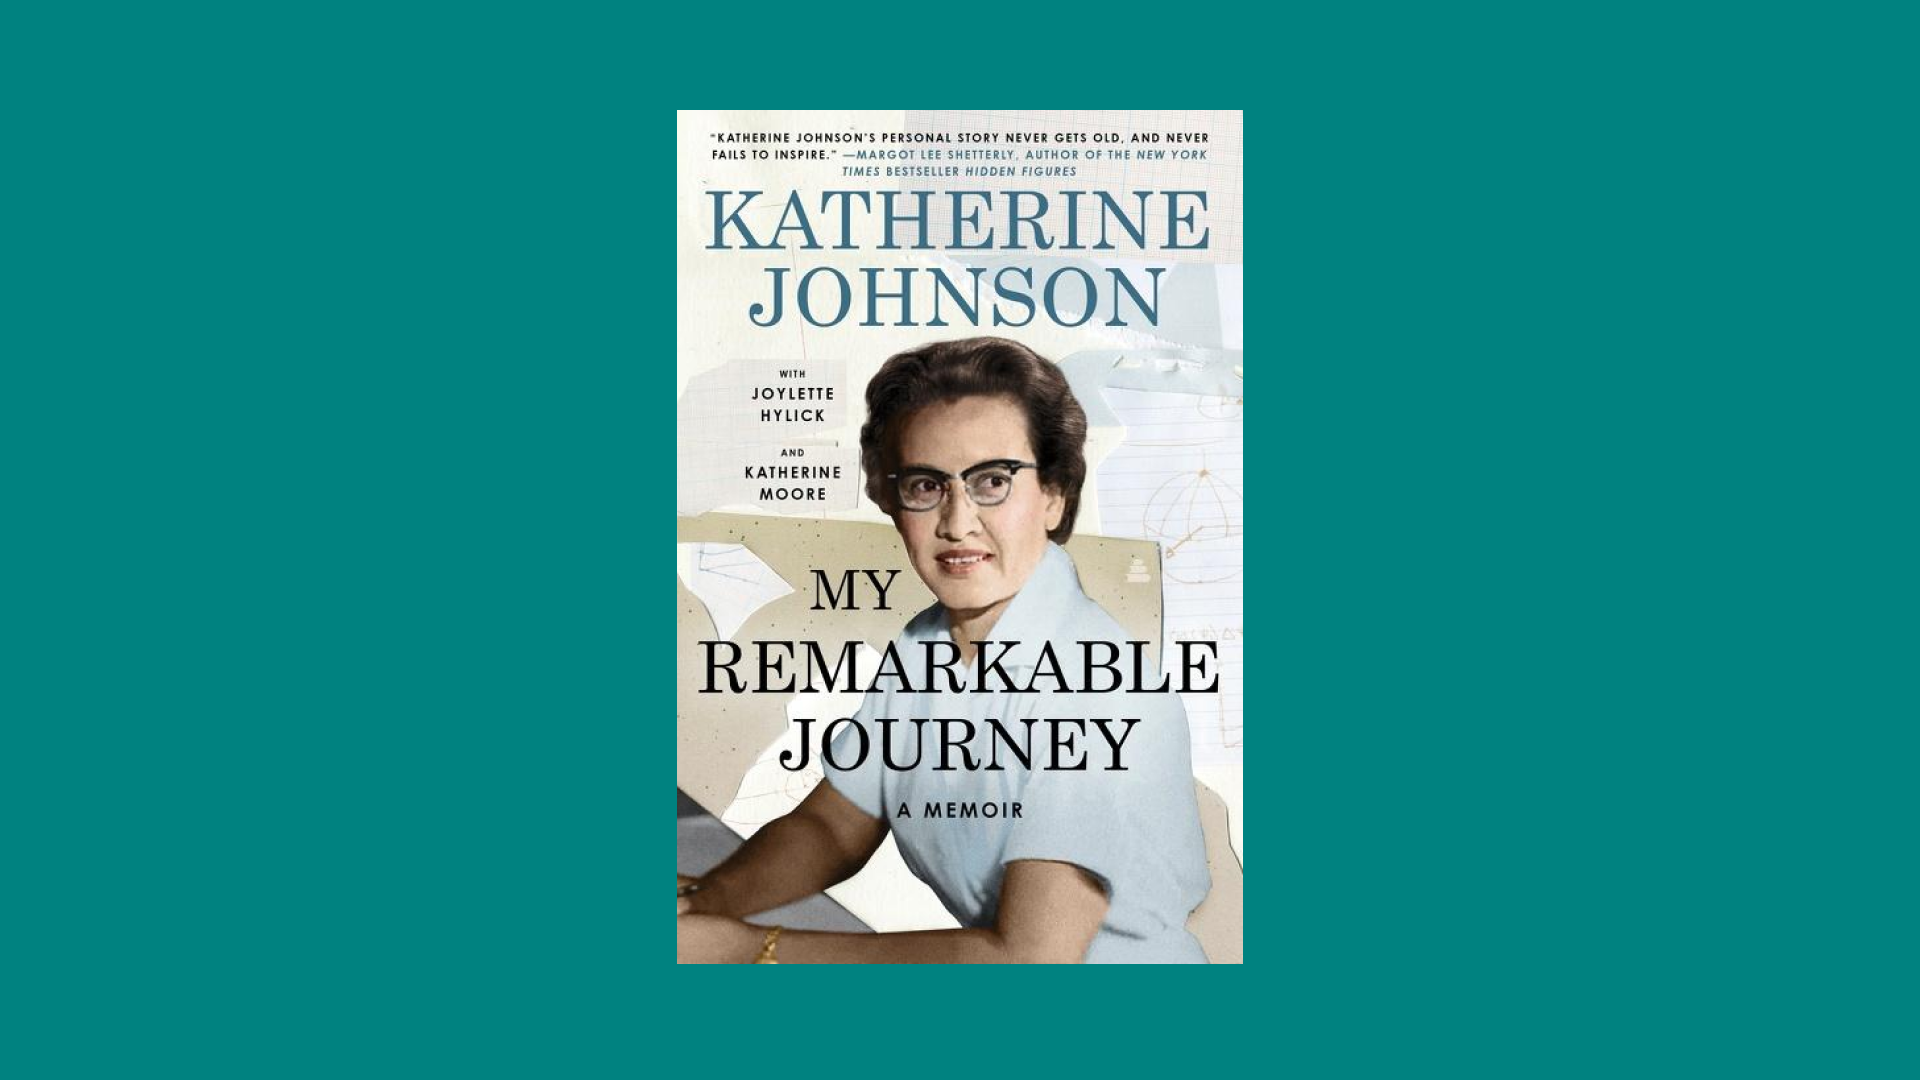 “My Remarkable Journey” by Katherine Johnson, Joylette Hylick, Katherine Moore